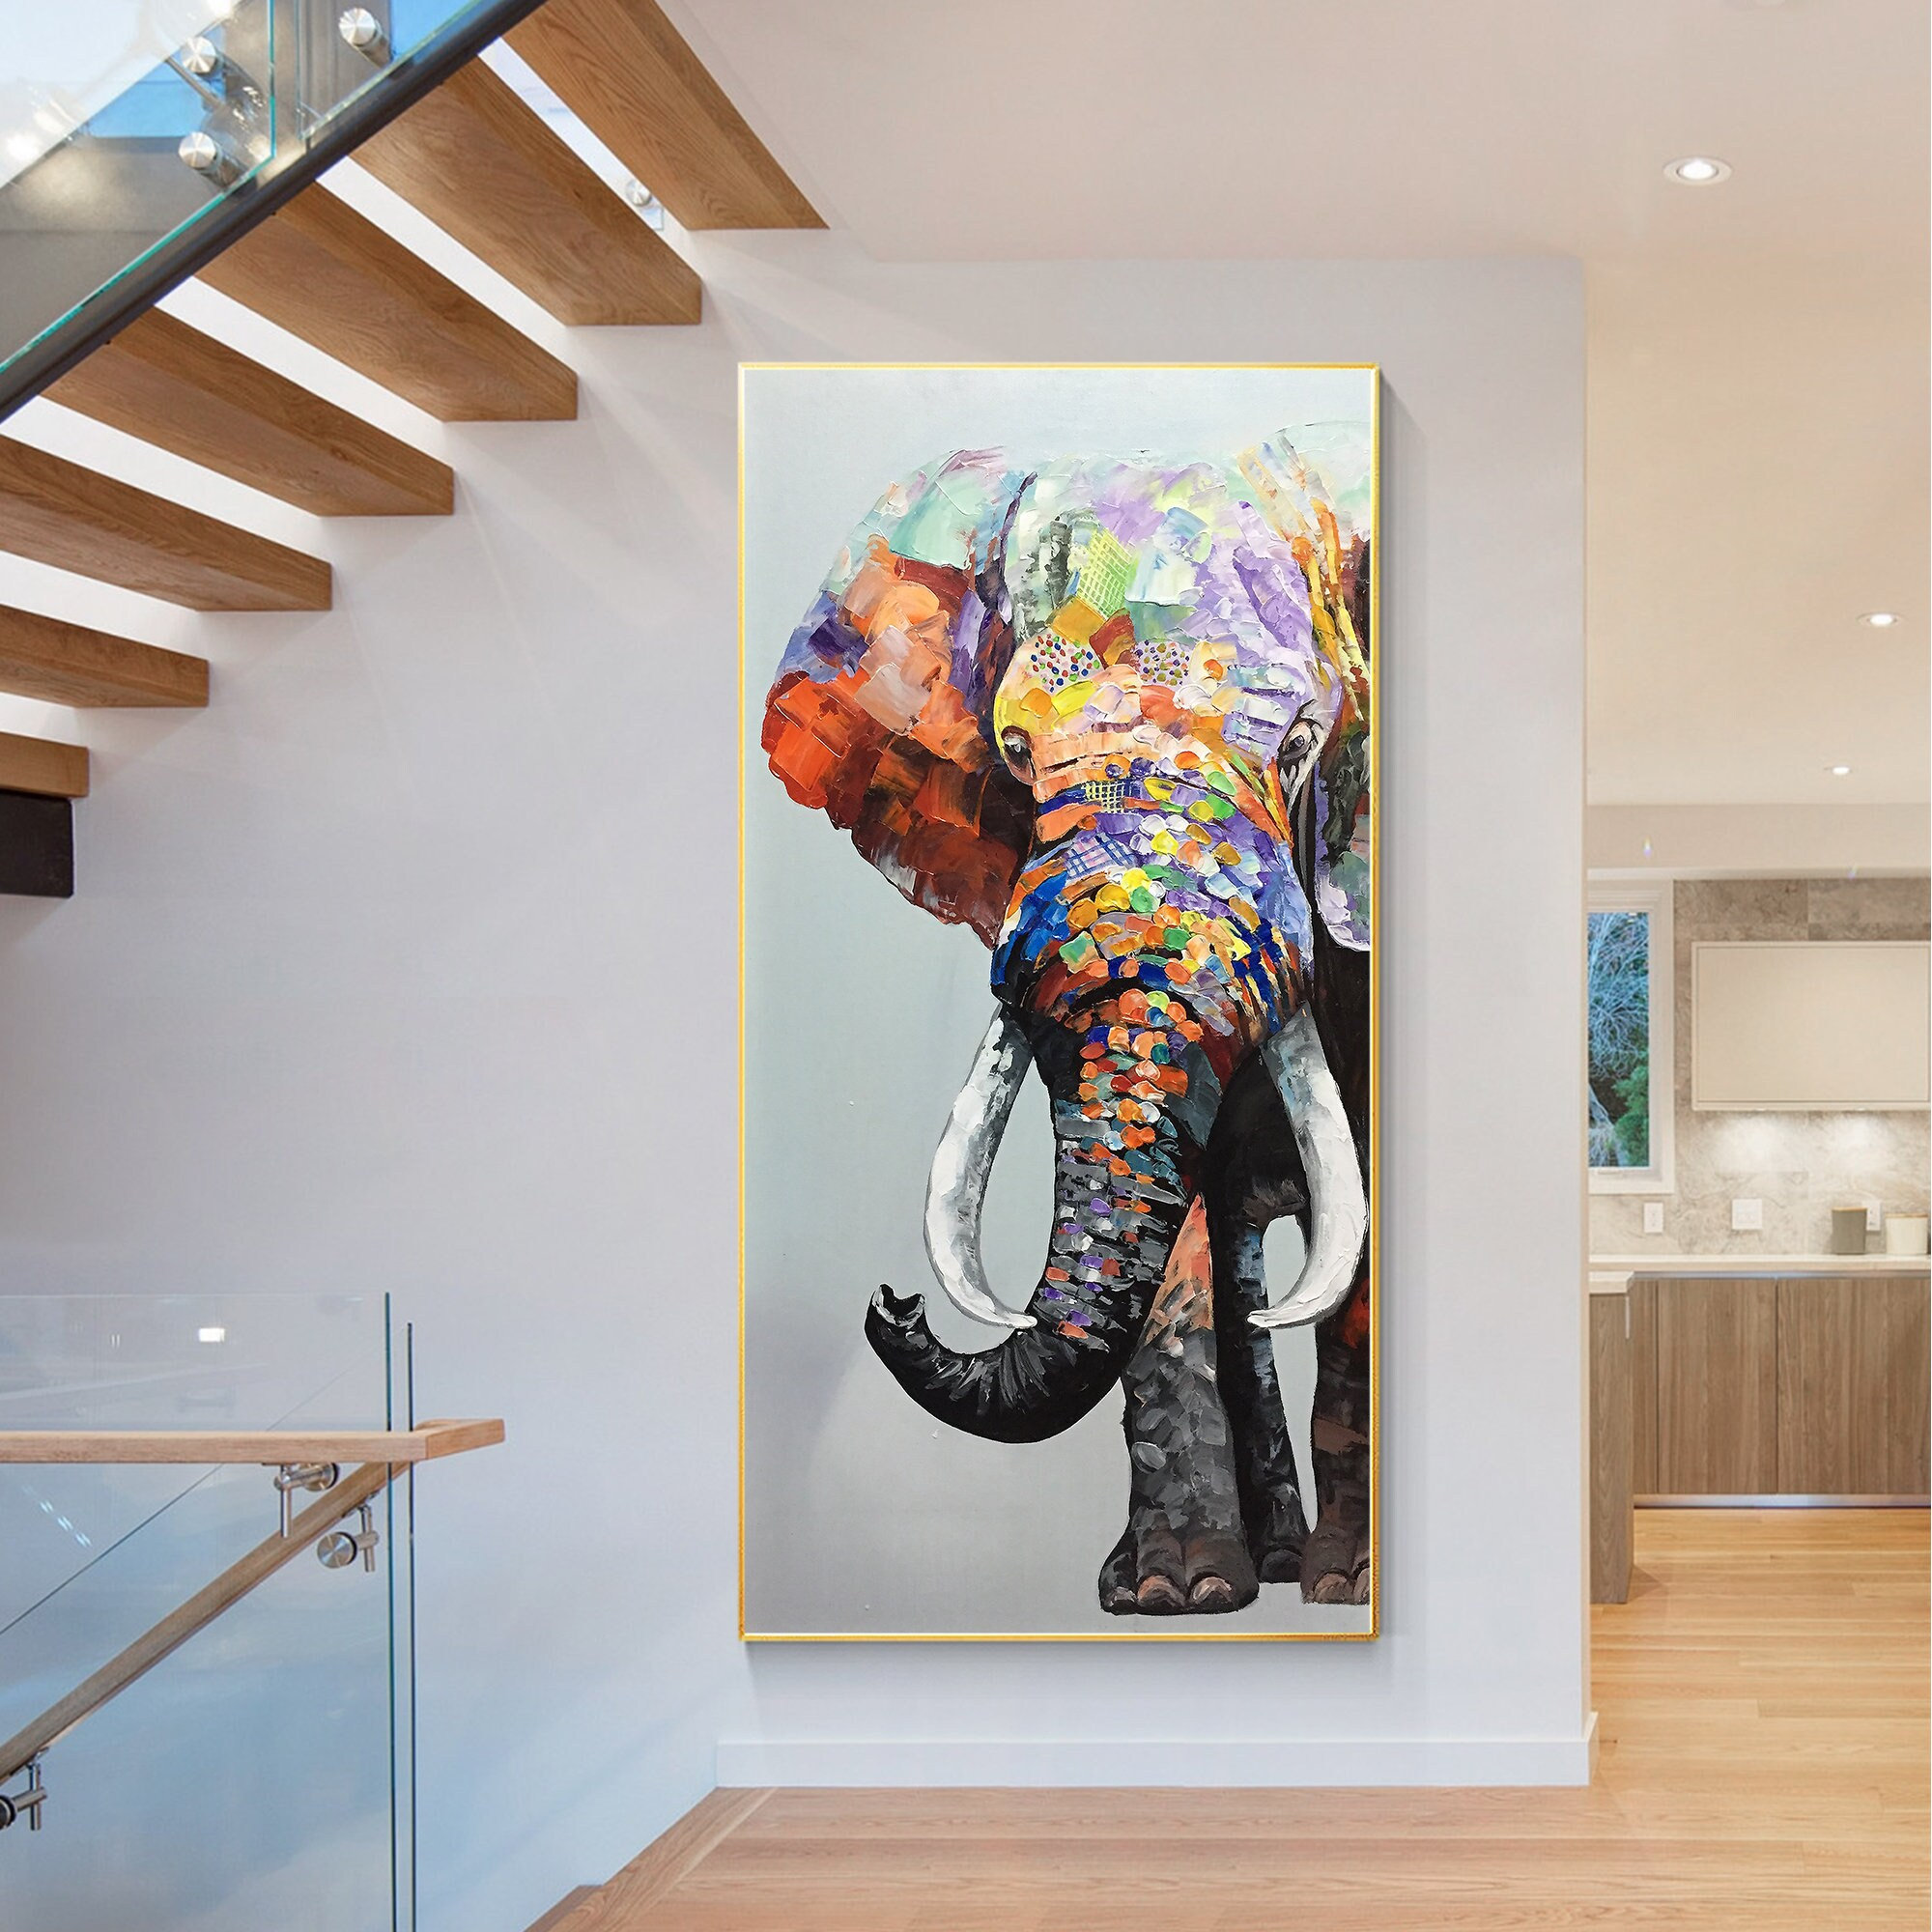 Colorful Elephant Tree Of Life - Diamond Paintings 